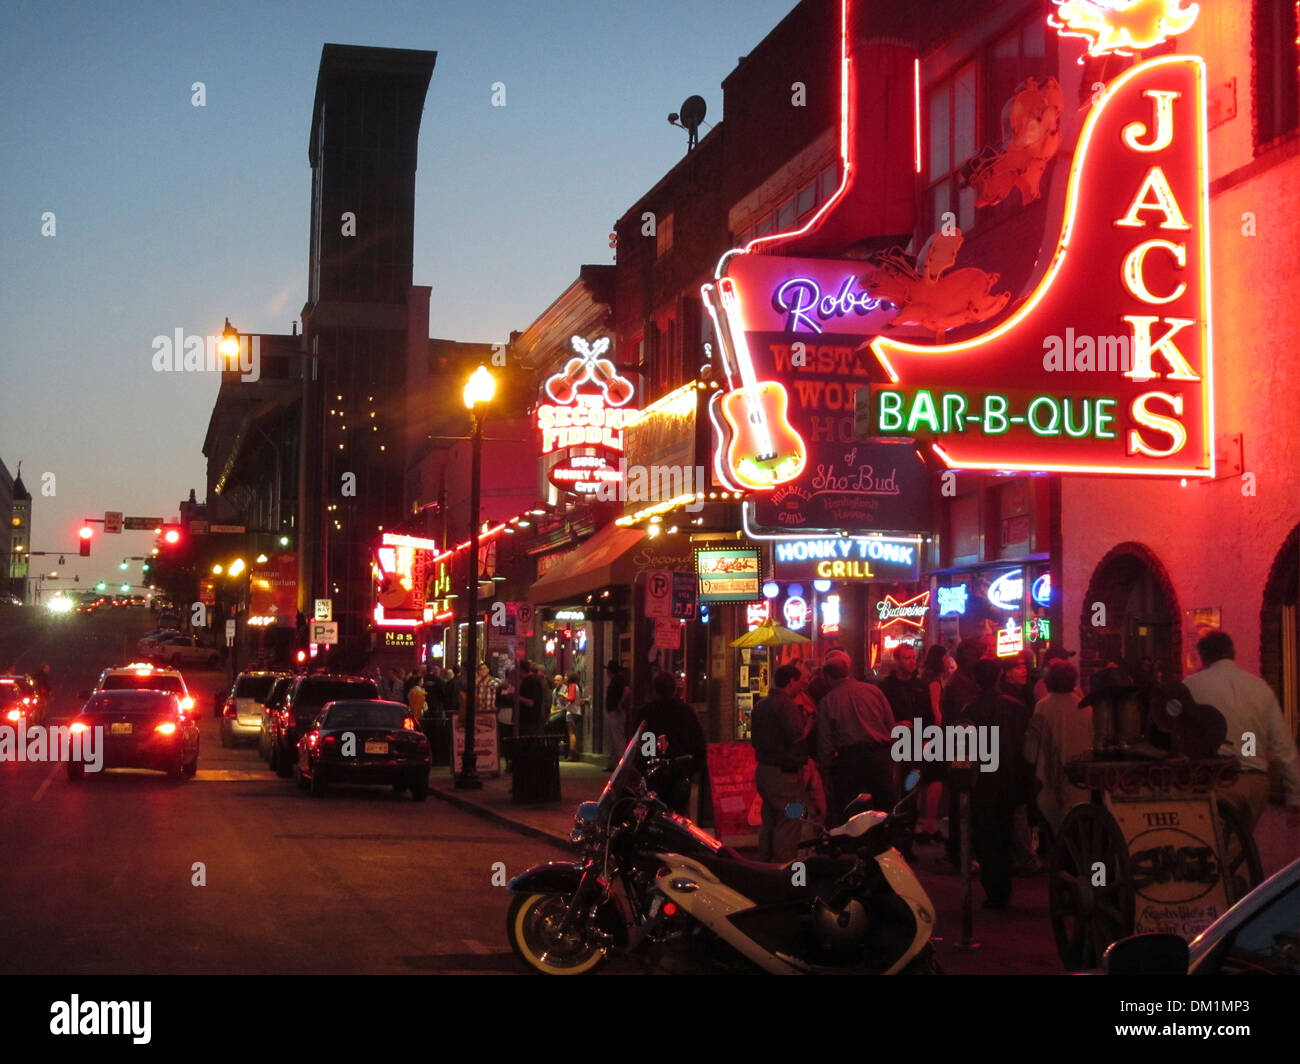 Exterior of Honky Tonk bar named Jack's Bar-B-Que, Nashville TN Stock Photo